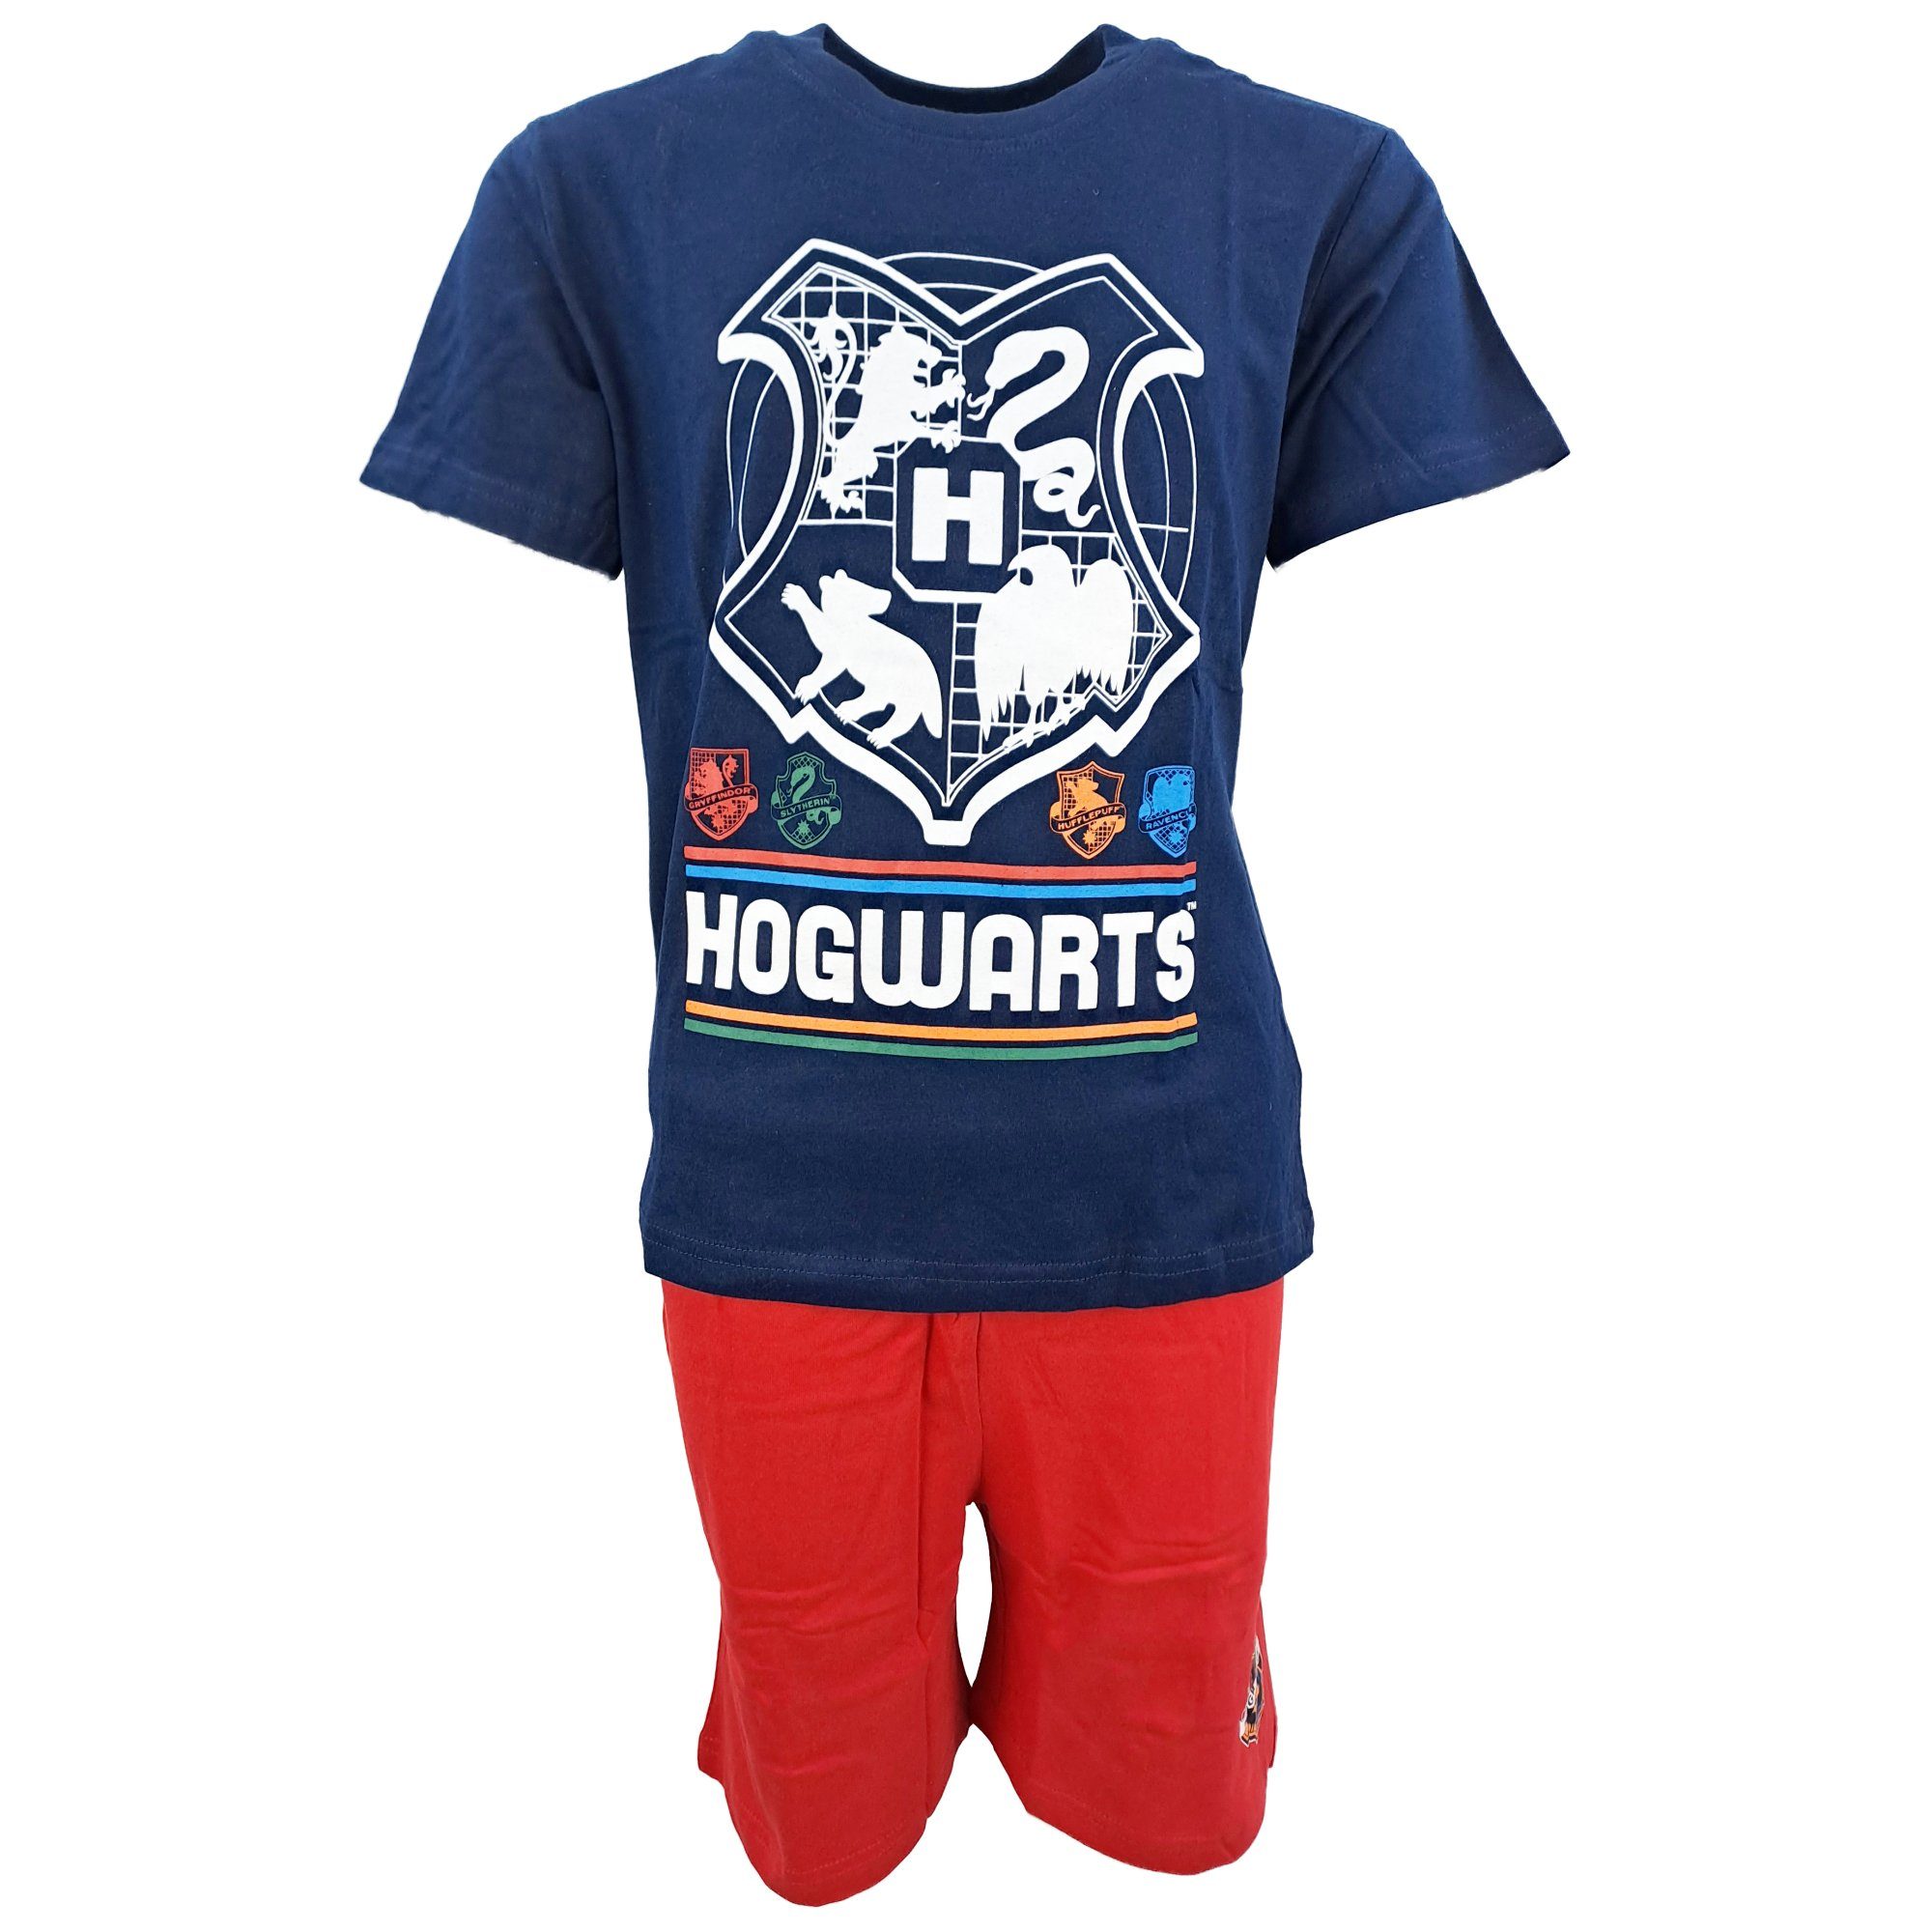 Harry Potter Schlafanzug Harry Potter Hogwarts Jugend kurzarm Pyjama Gr. 134 bis 164, 100% Baumwolle Blau